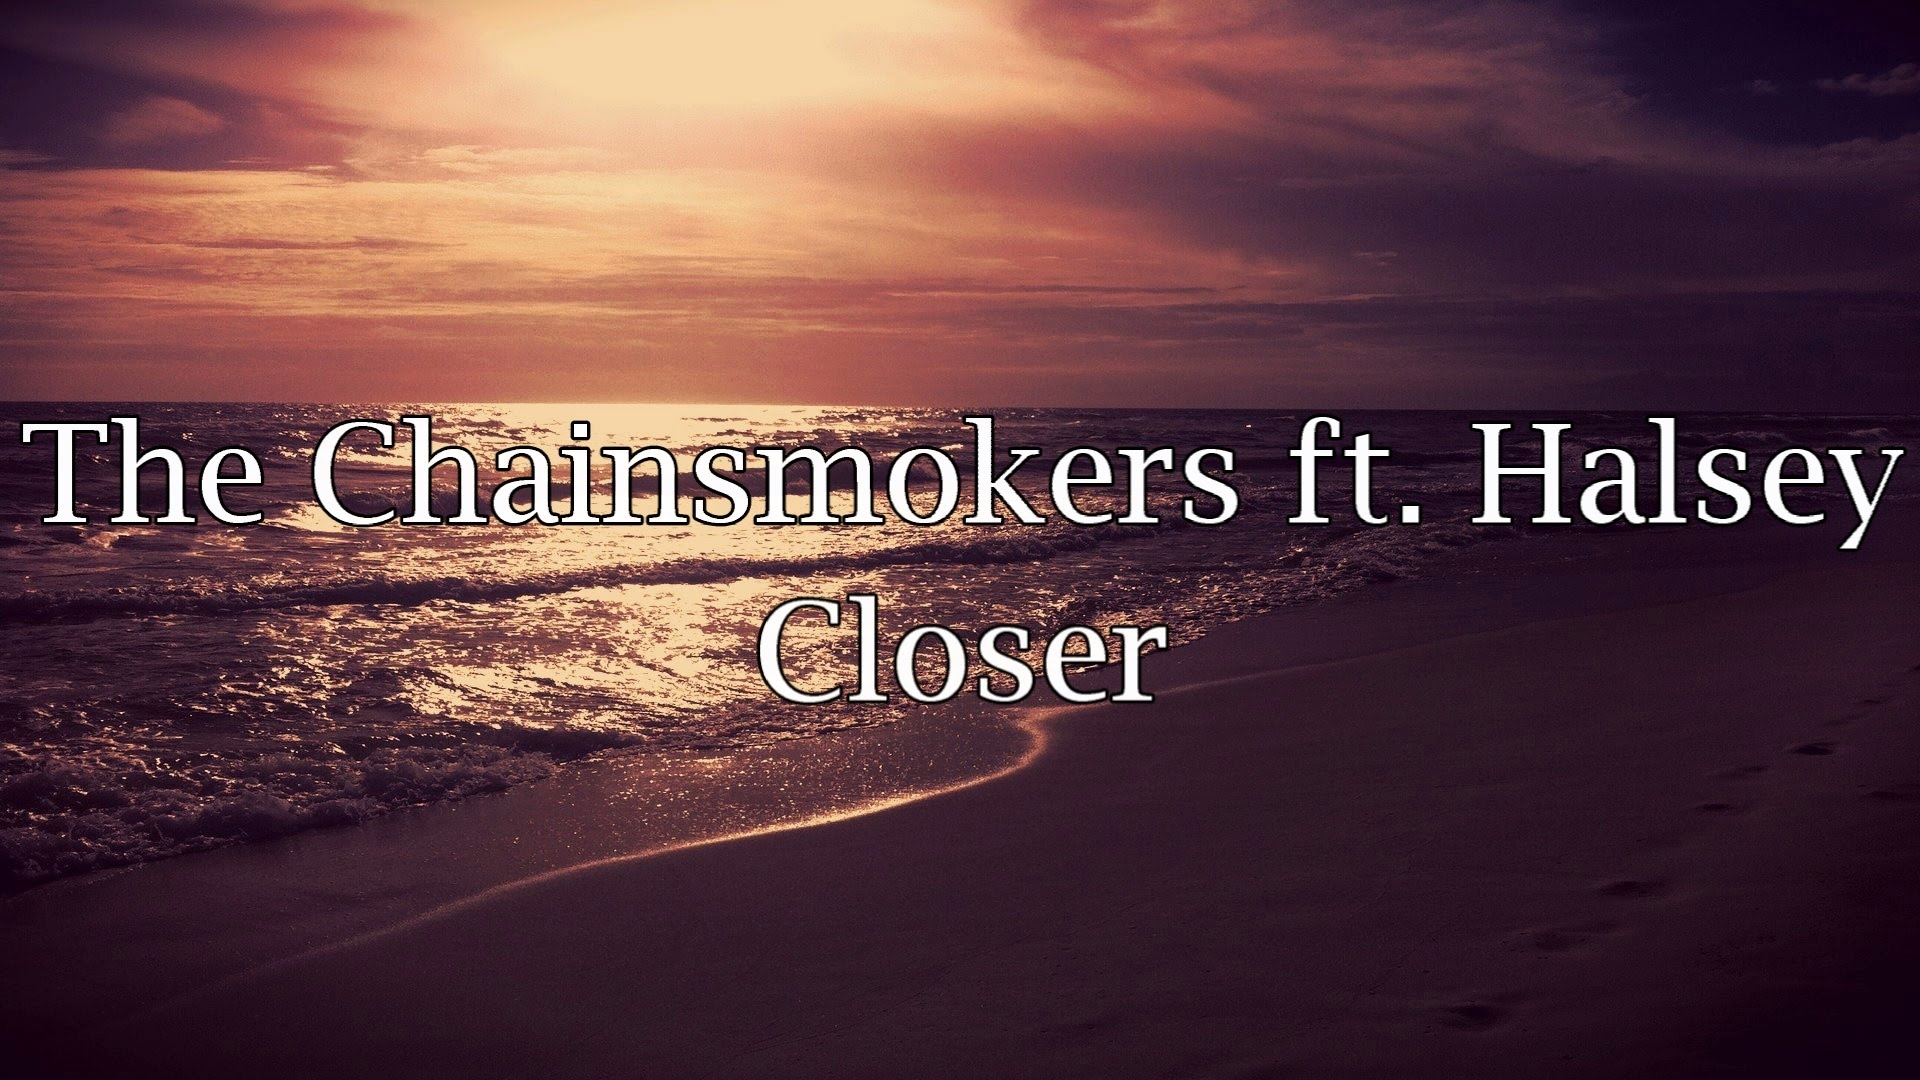 Closer the chainsmokers. Halsey closer. Halsey Chainsmokers. The Chainsmokers - closer (Lyric) ft. Halsey.